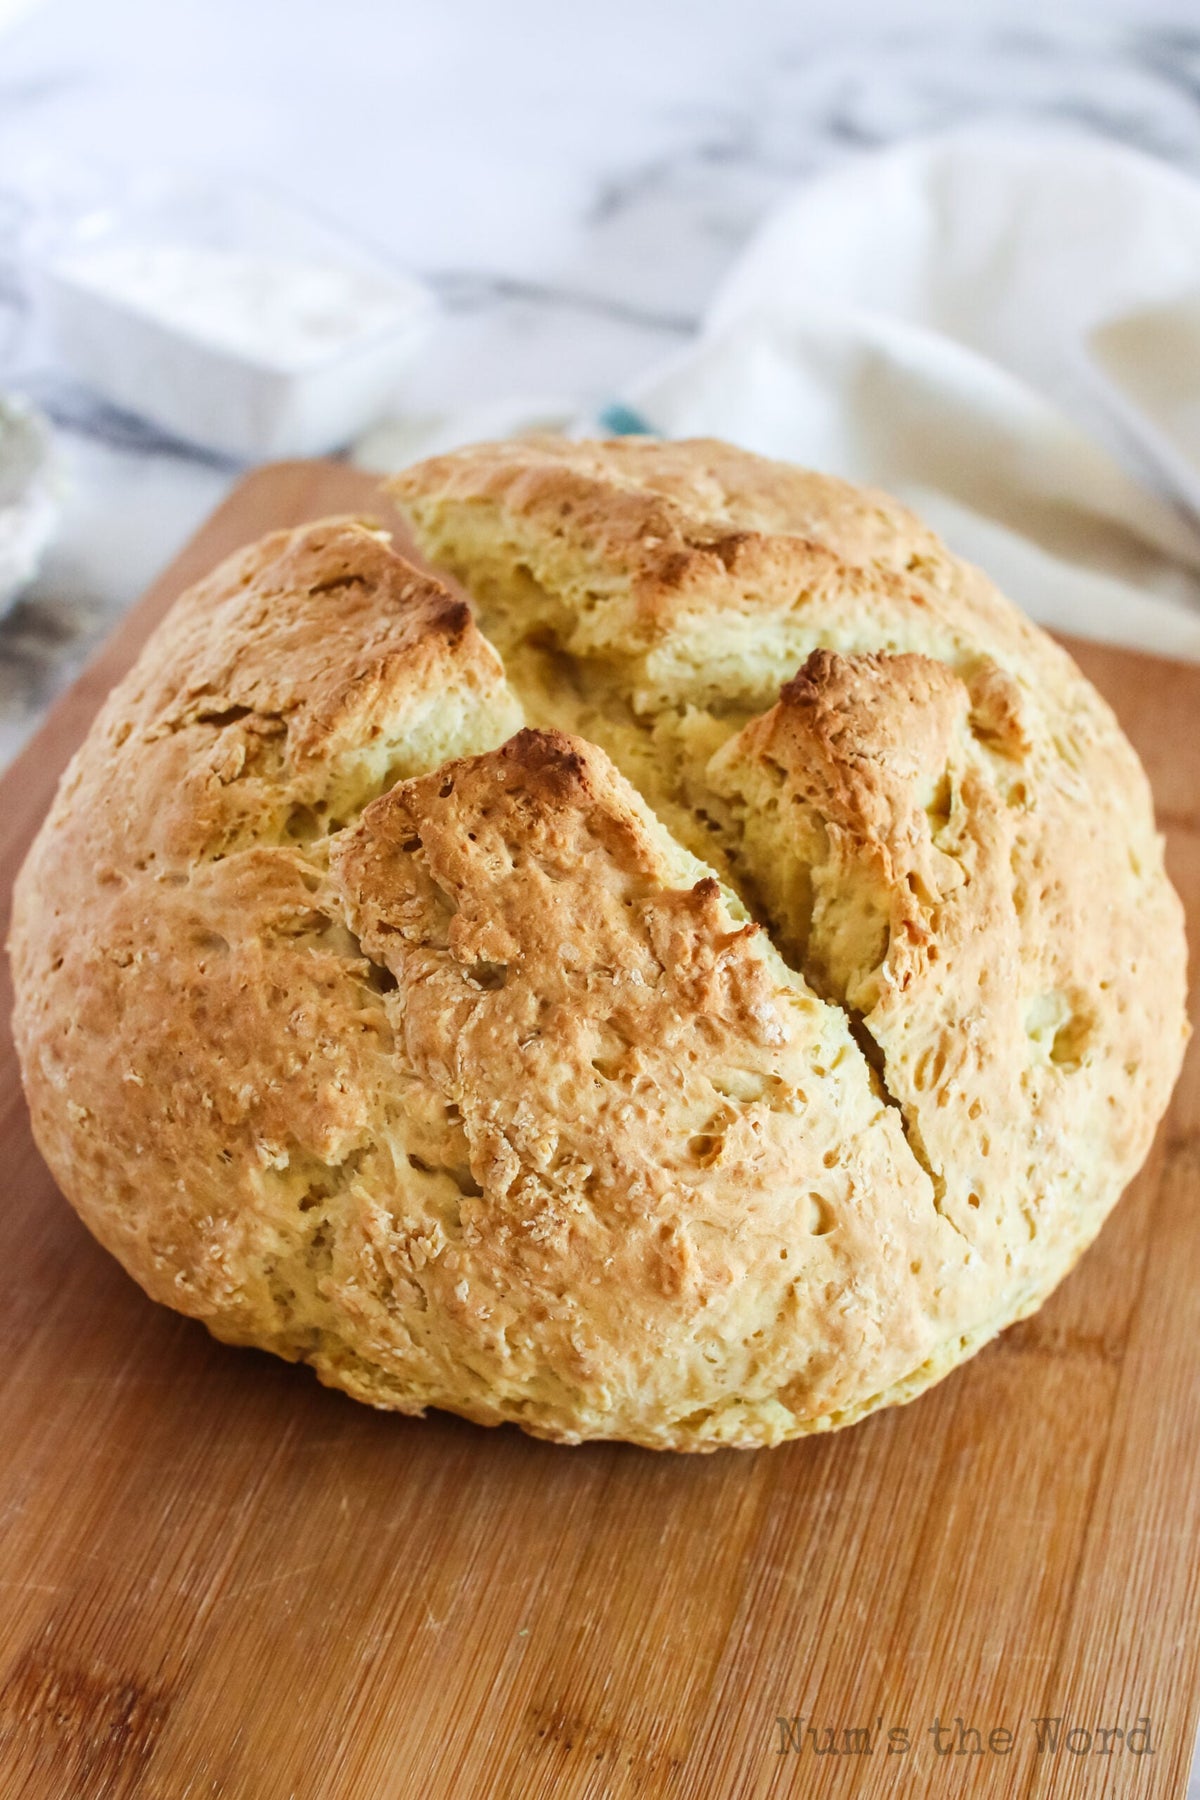 Vaughan - Baking 101: Breads Across the Globe